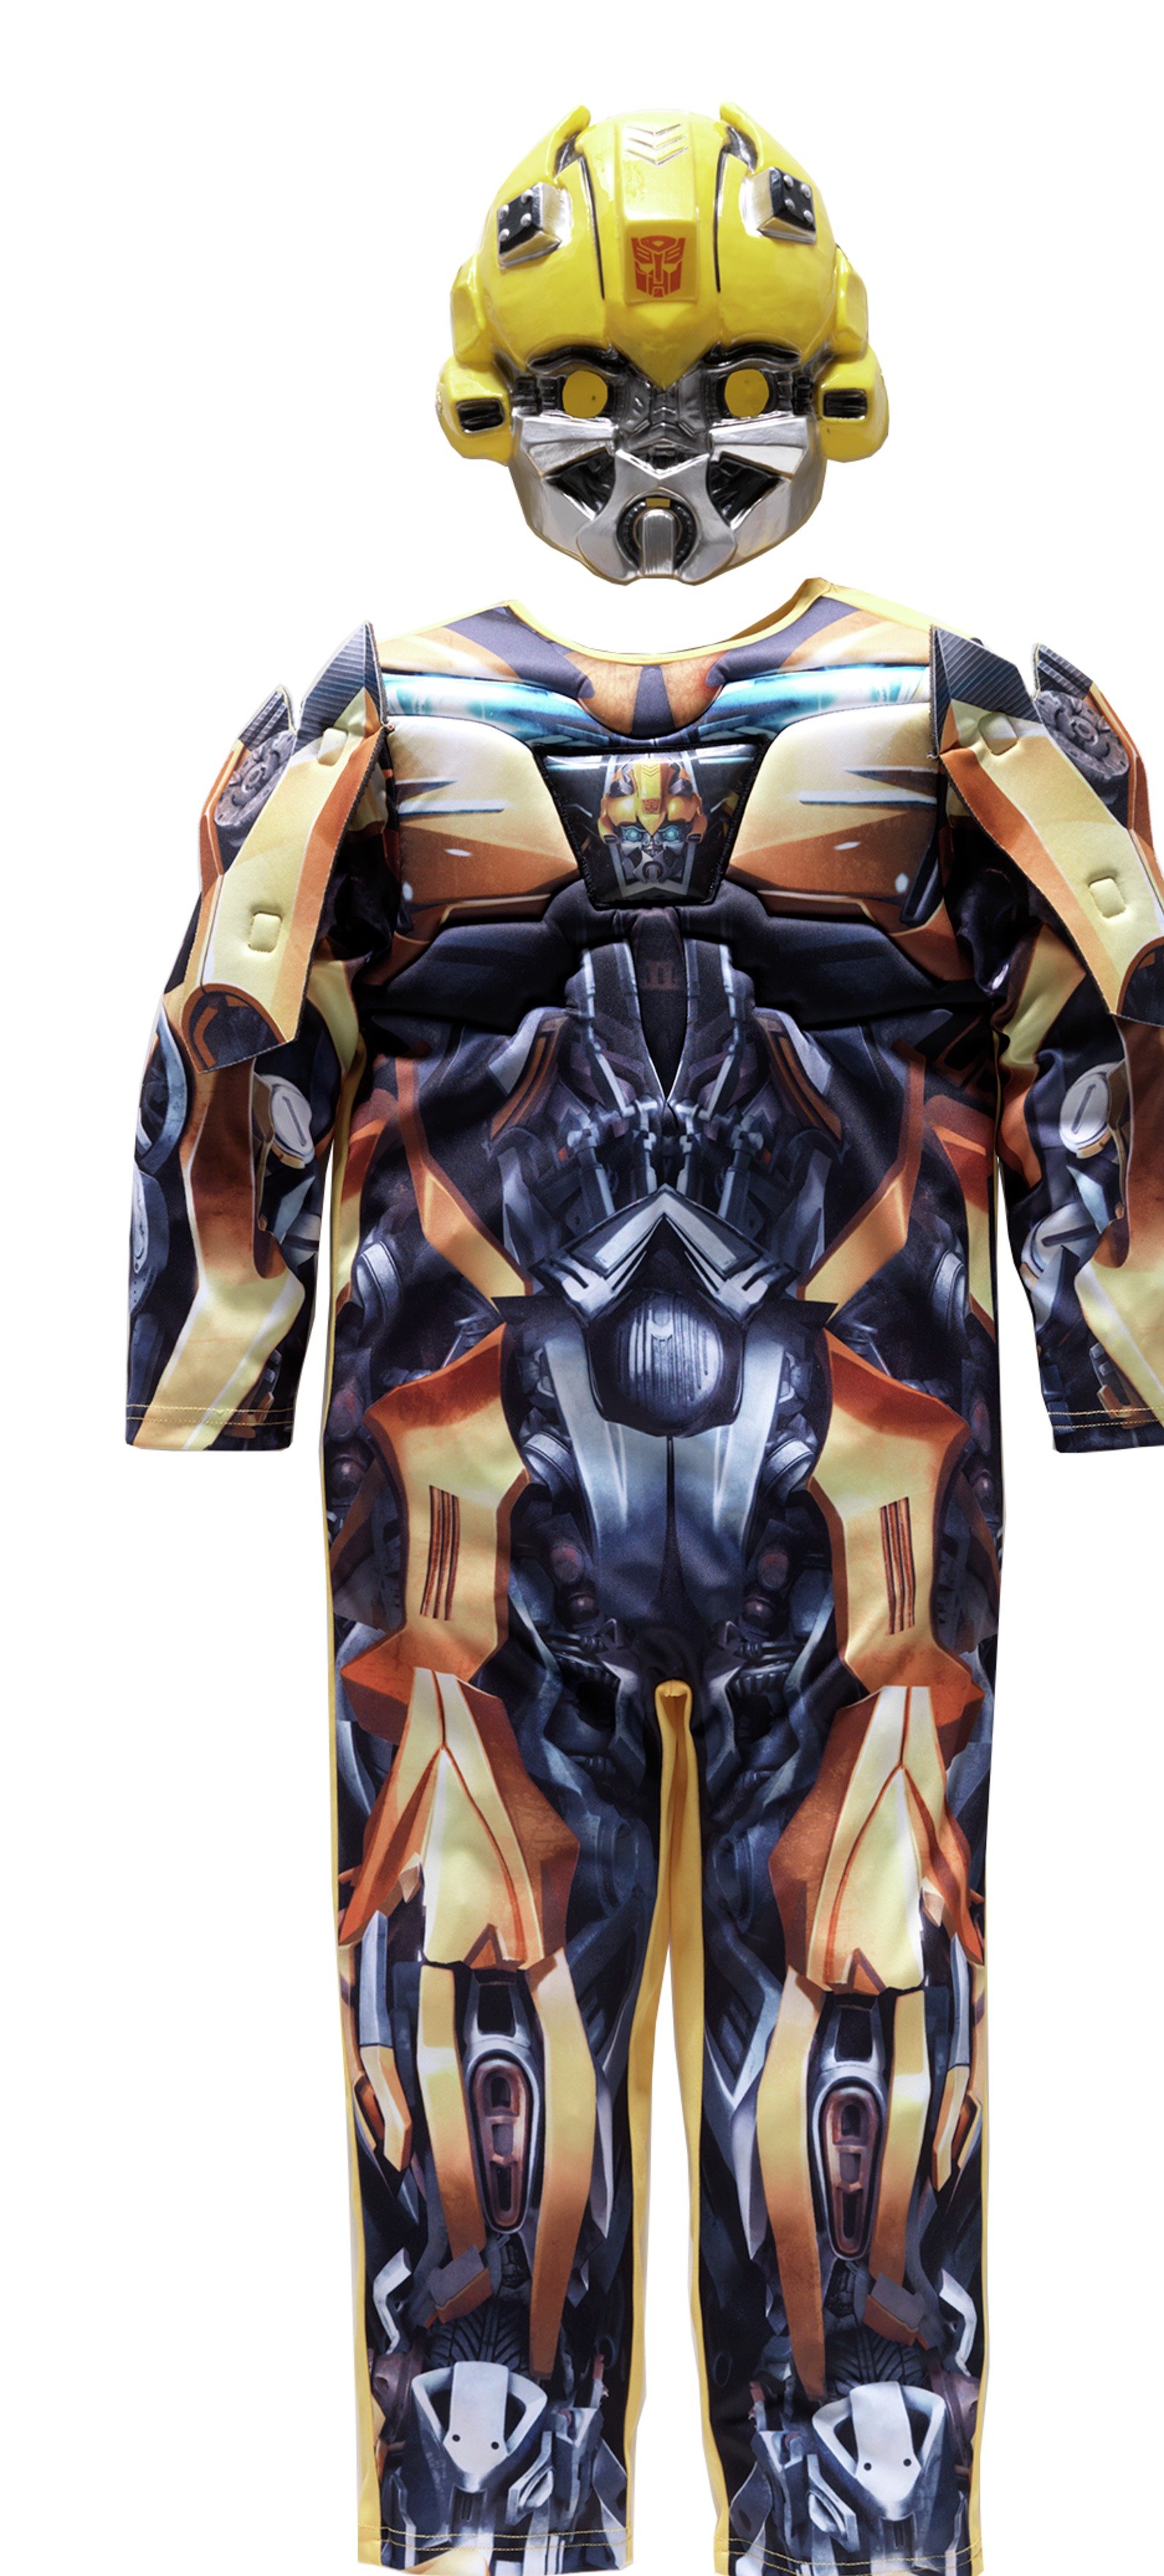 Transformers Fancy Dress Costume - 3-4 Years